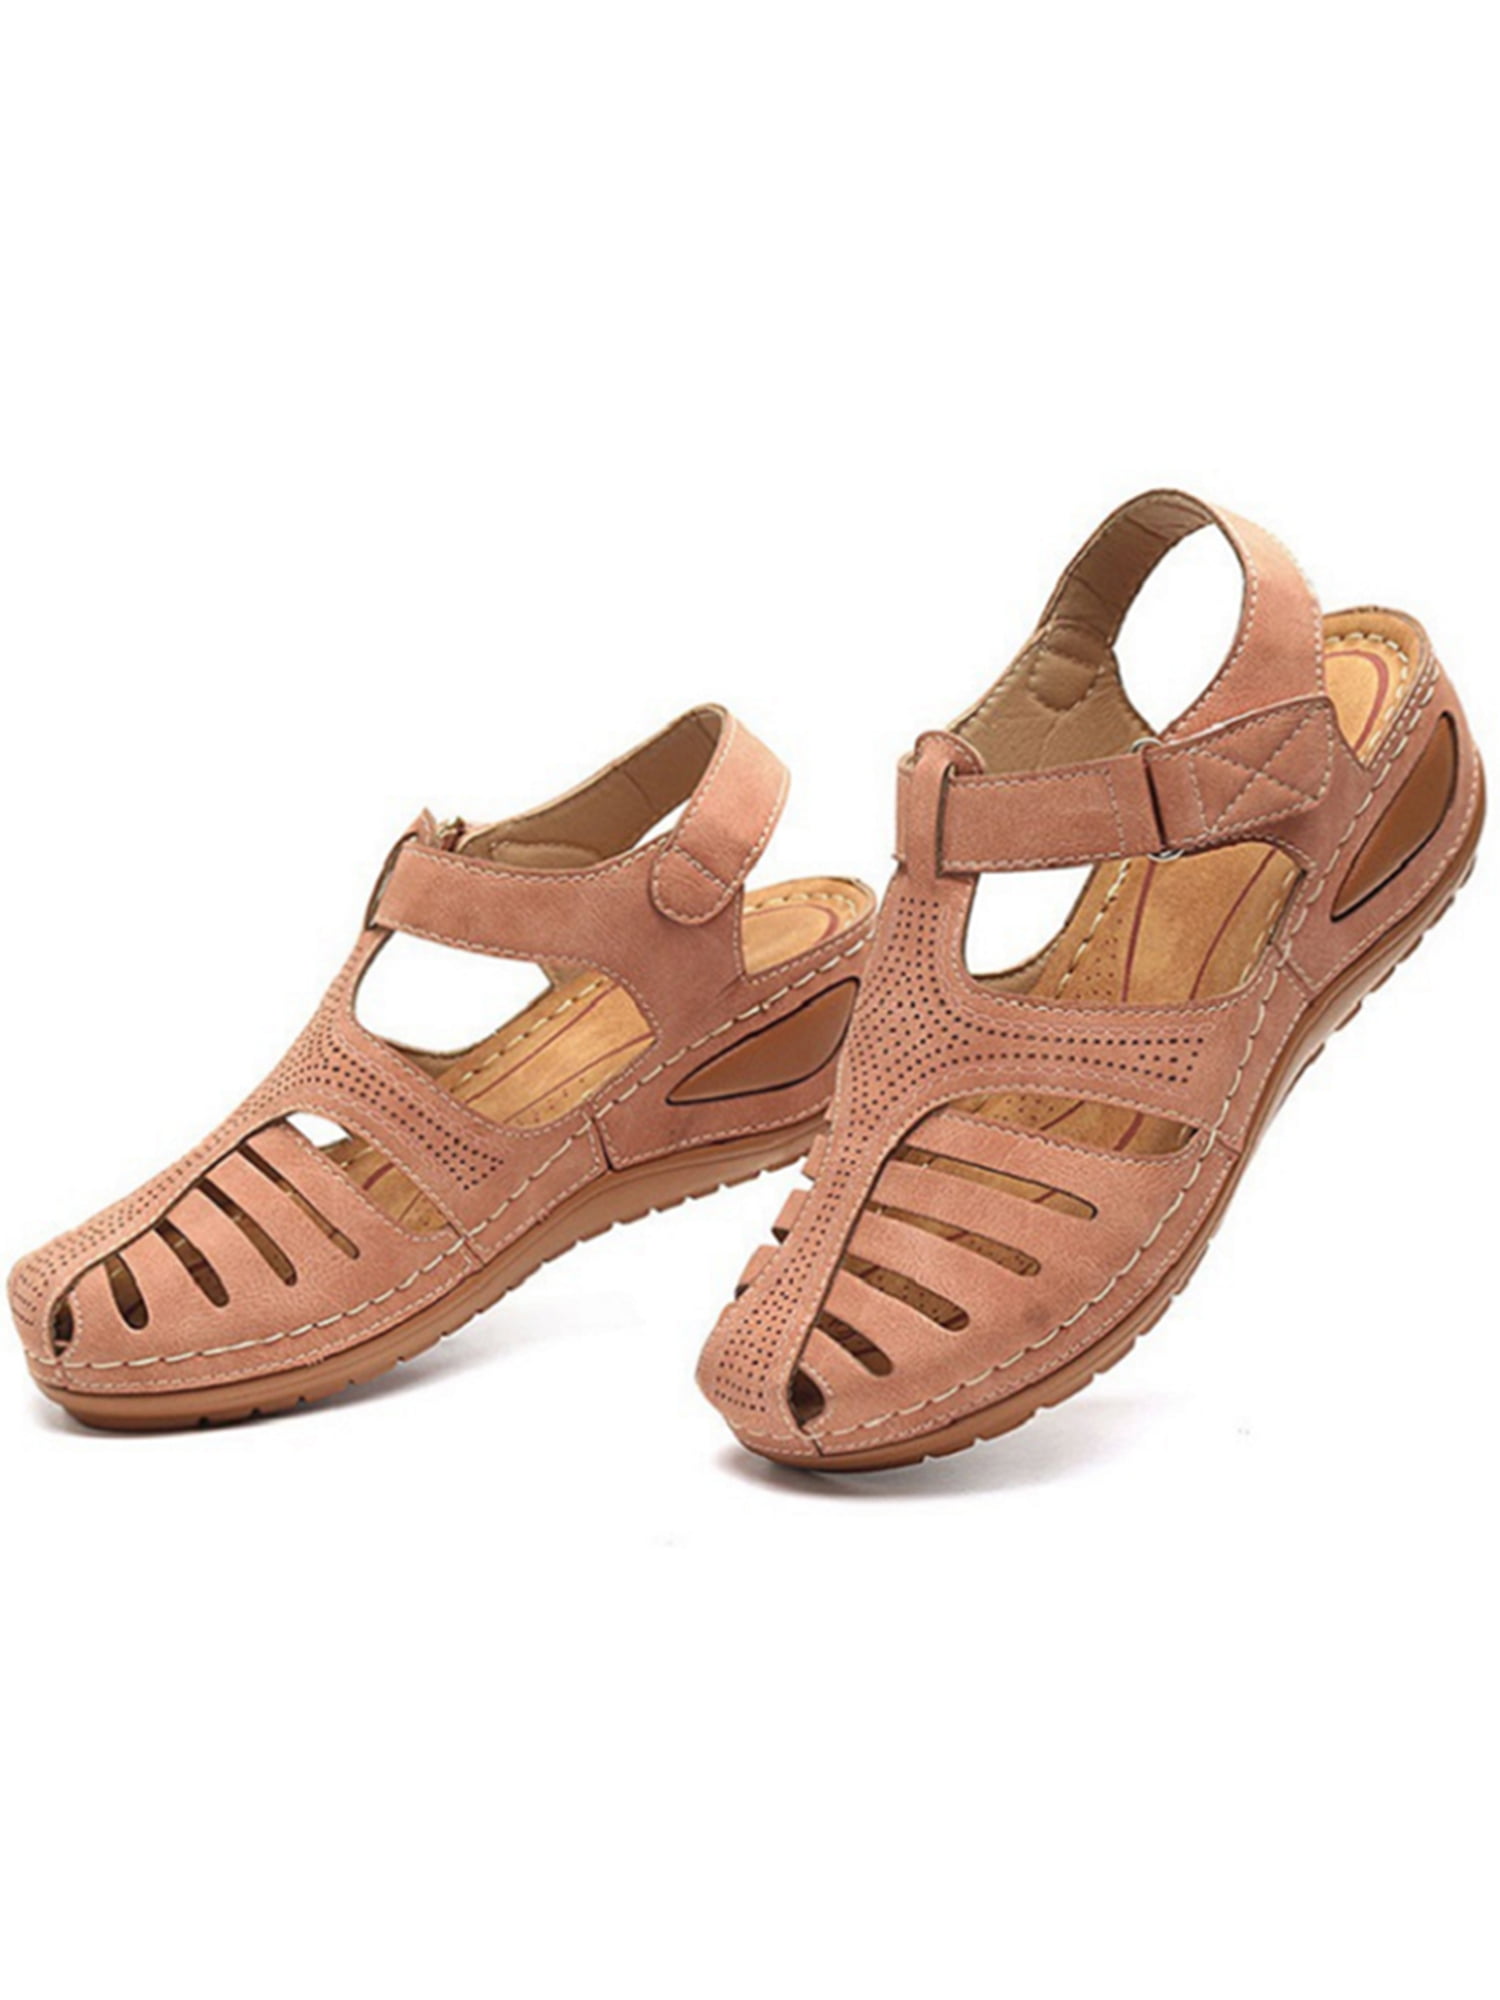 Lady Orthopedic Sandals Slippers Mules Wedge Platform Comfy Flat Casual Shoes 